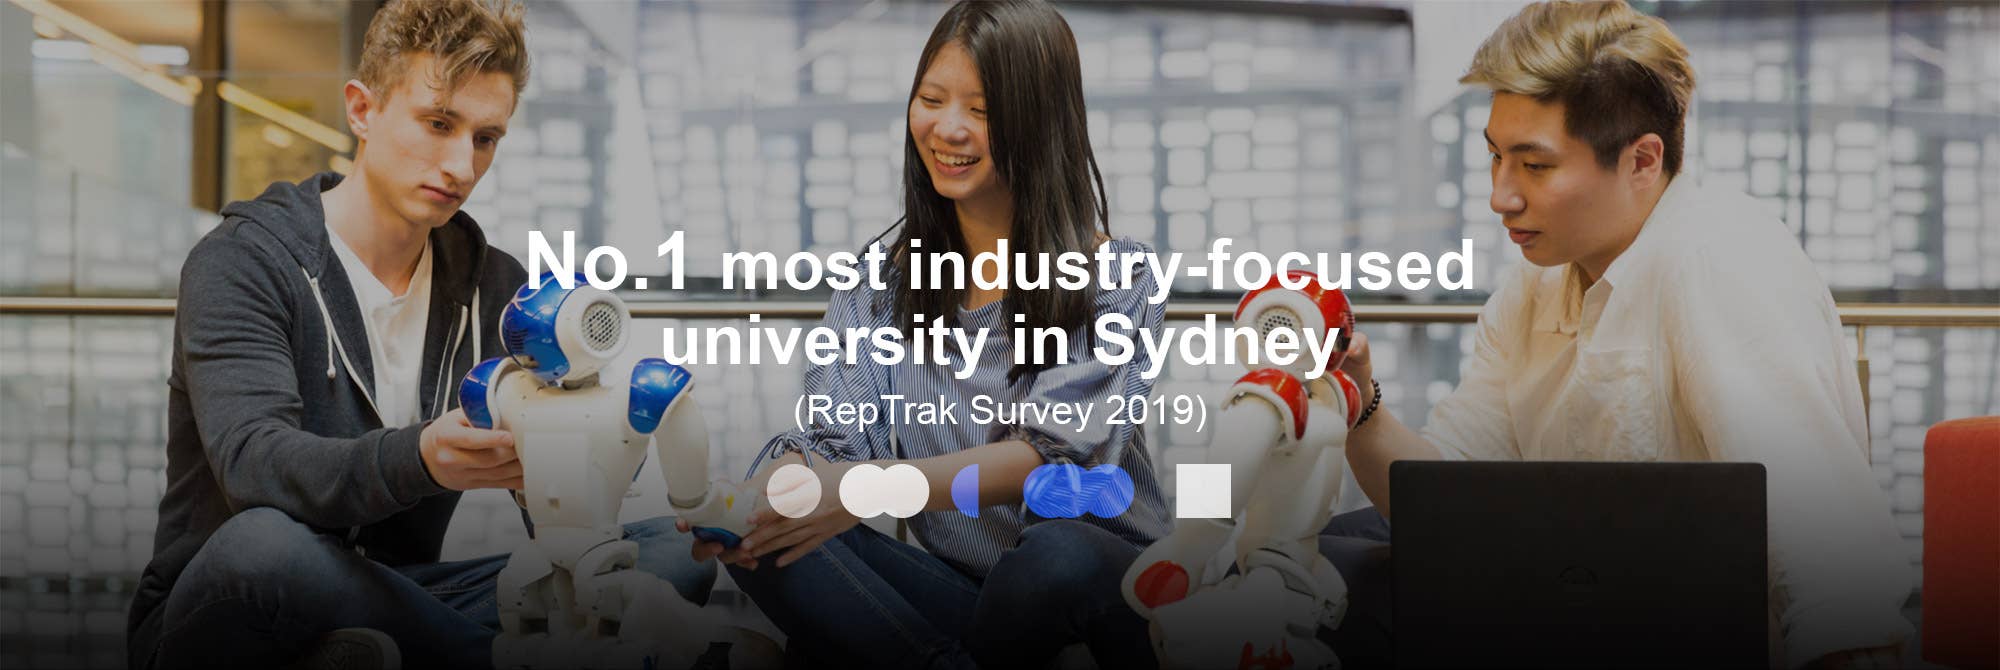 No. 1 most industry-focused university in Sydney 